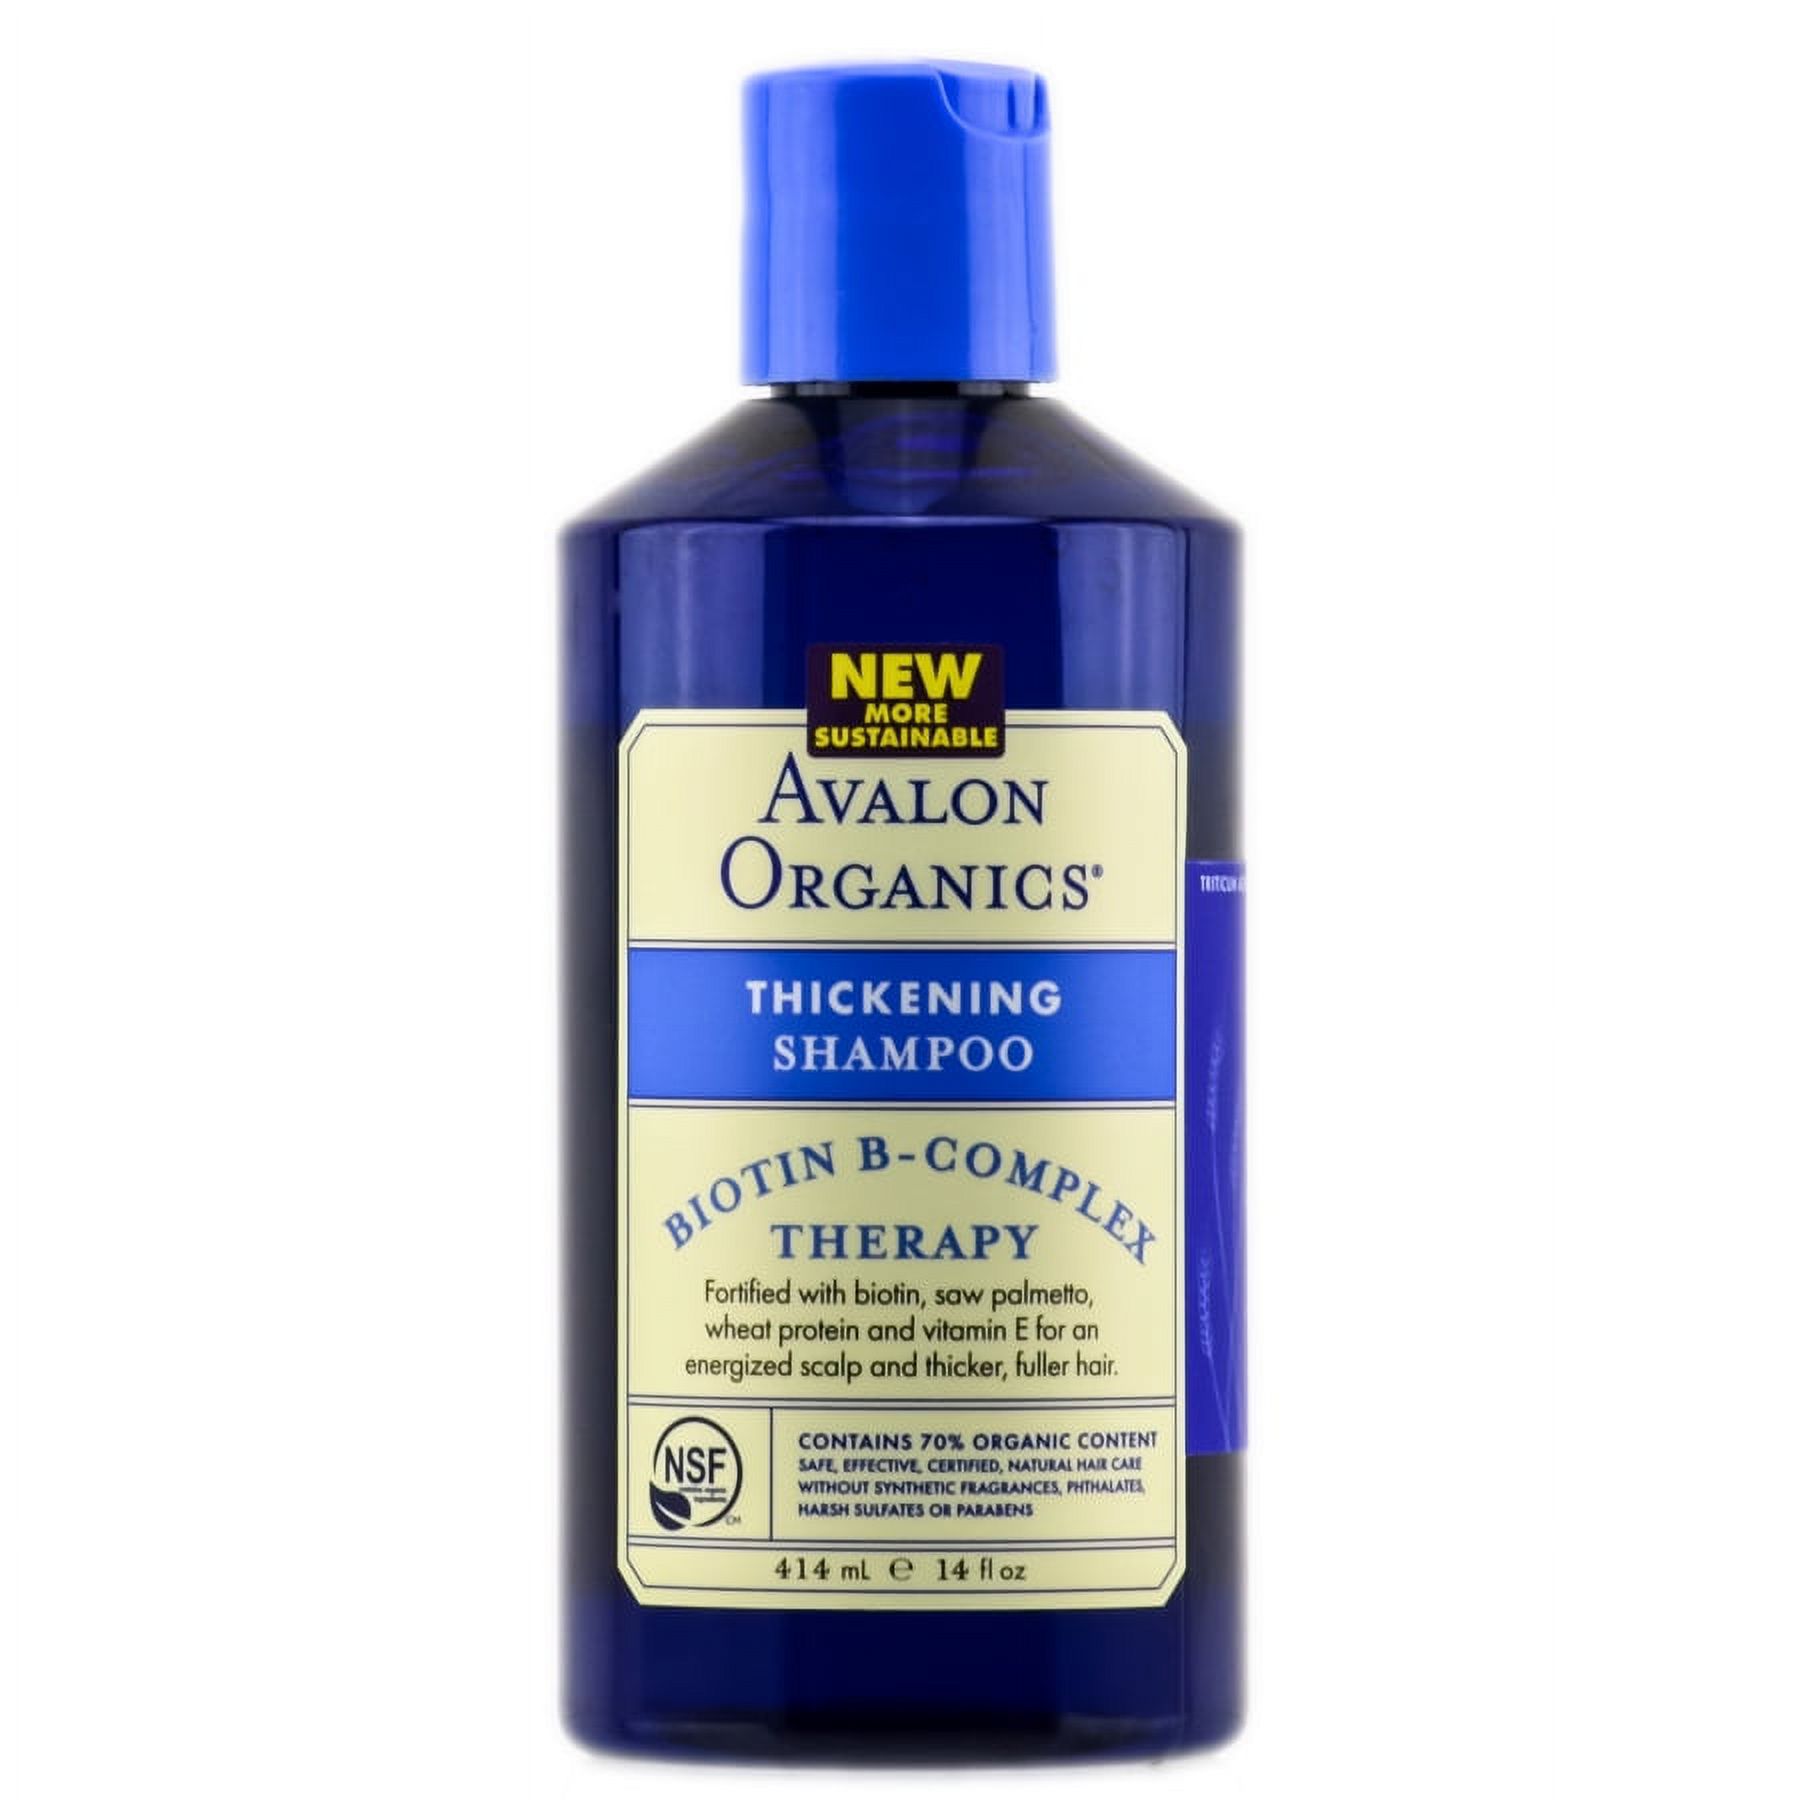 Avalon Organics Biotin B-Complex Thickening Shampoo, 14 oz. - image 1 of 7